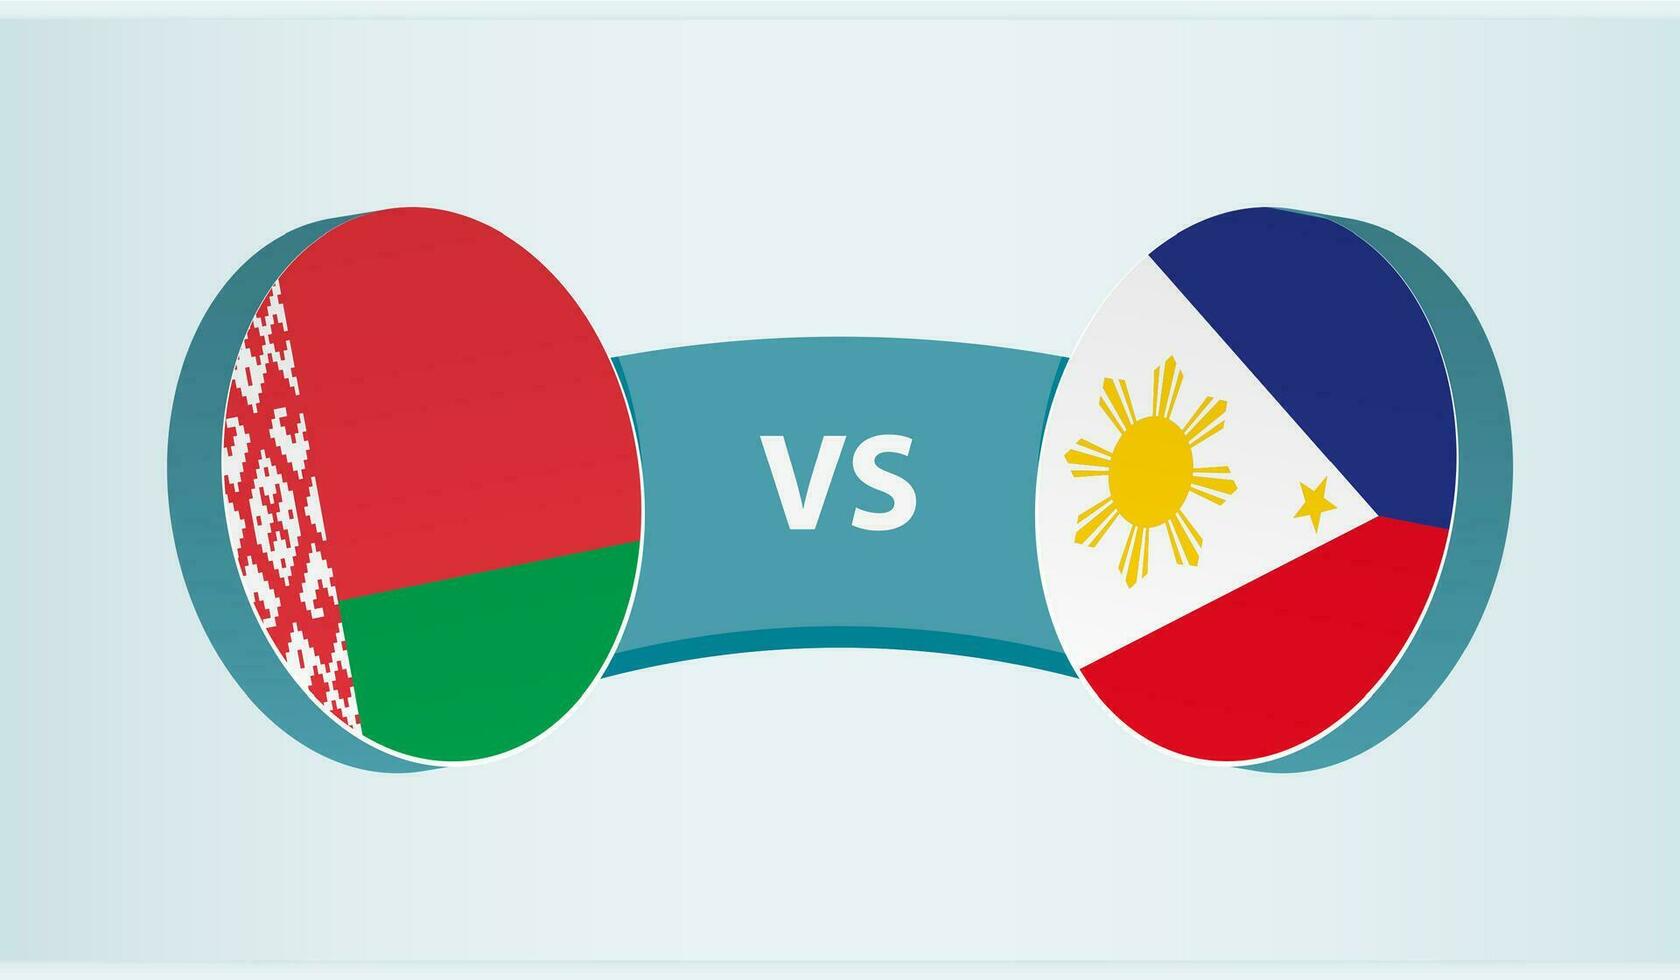 Belarus versus Philippines, team sports competition concept. vector